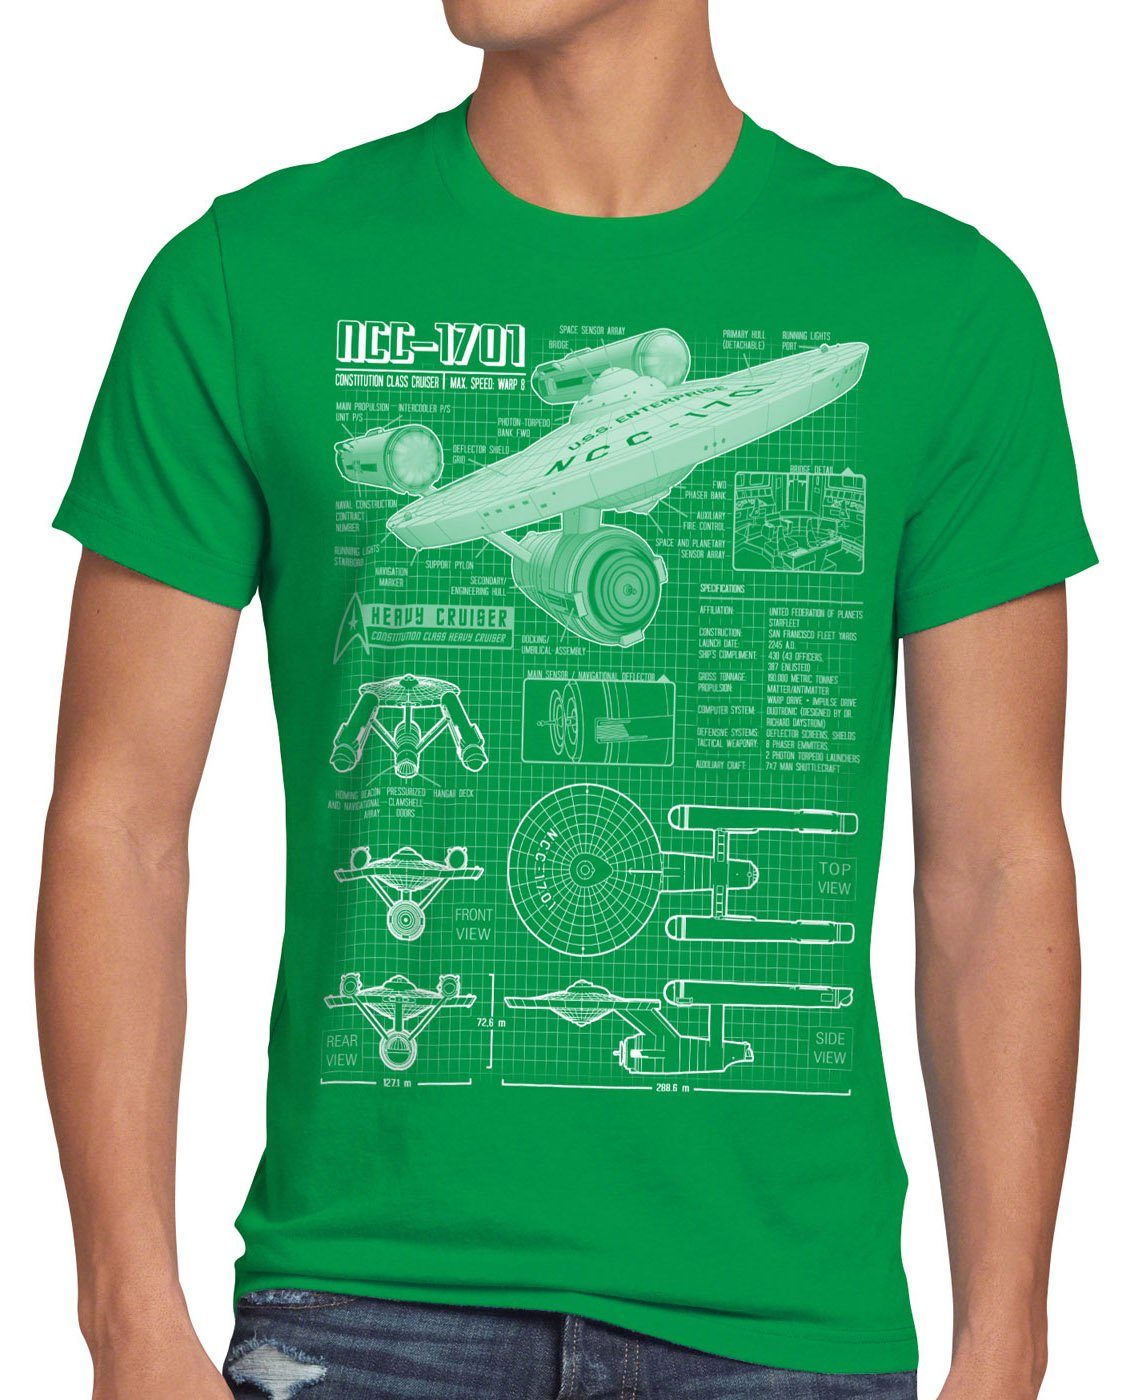 style3 Print-Shirt Herren T-Shirt NCC-1701 christopher pike trek trekkie star sternenflotte klingon grün